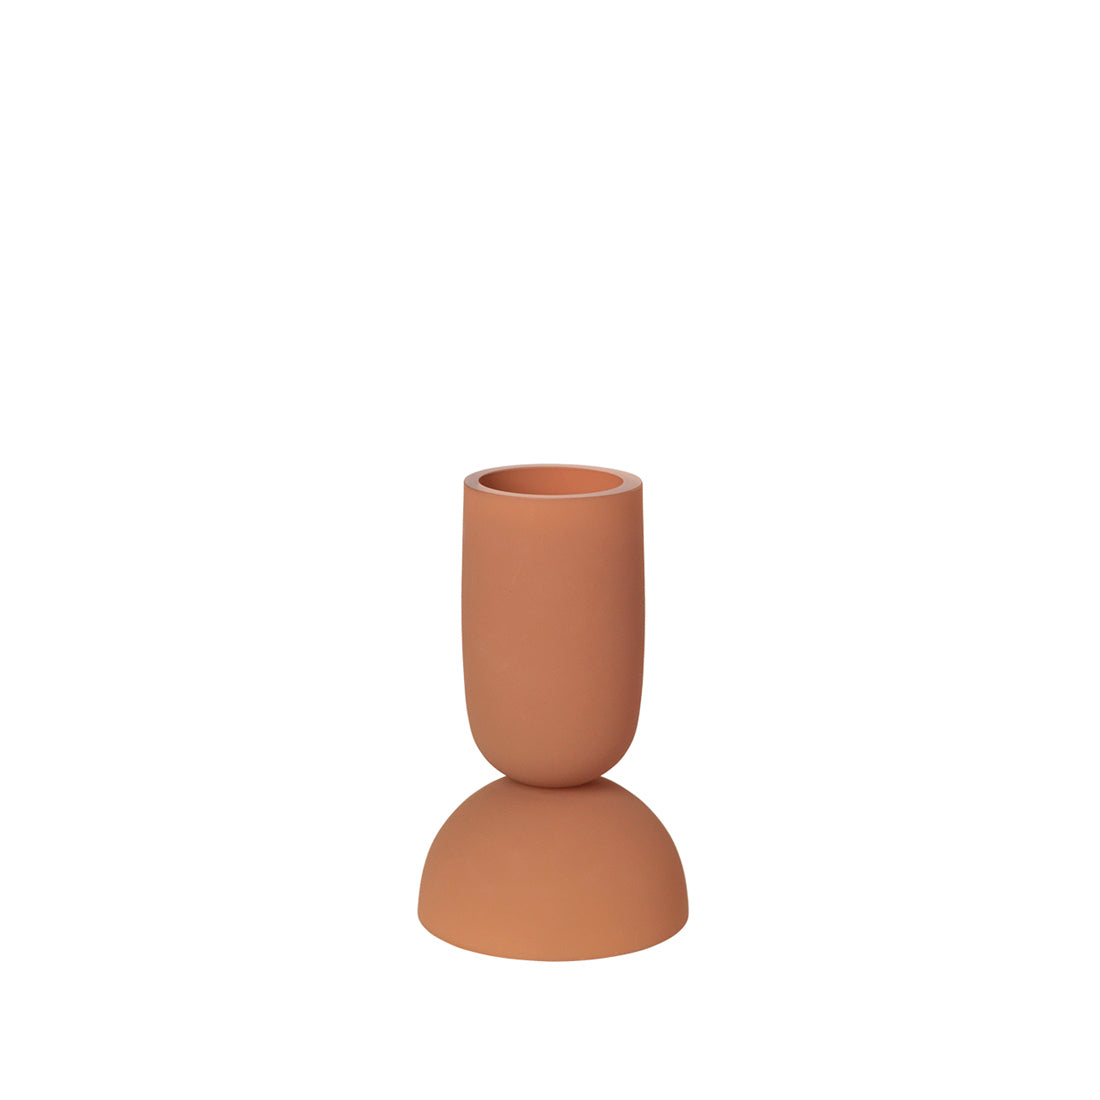 dual vase in ocher colored glass designed by Kristina Dam studio